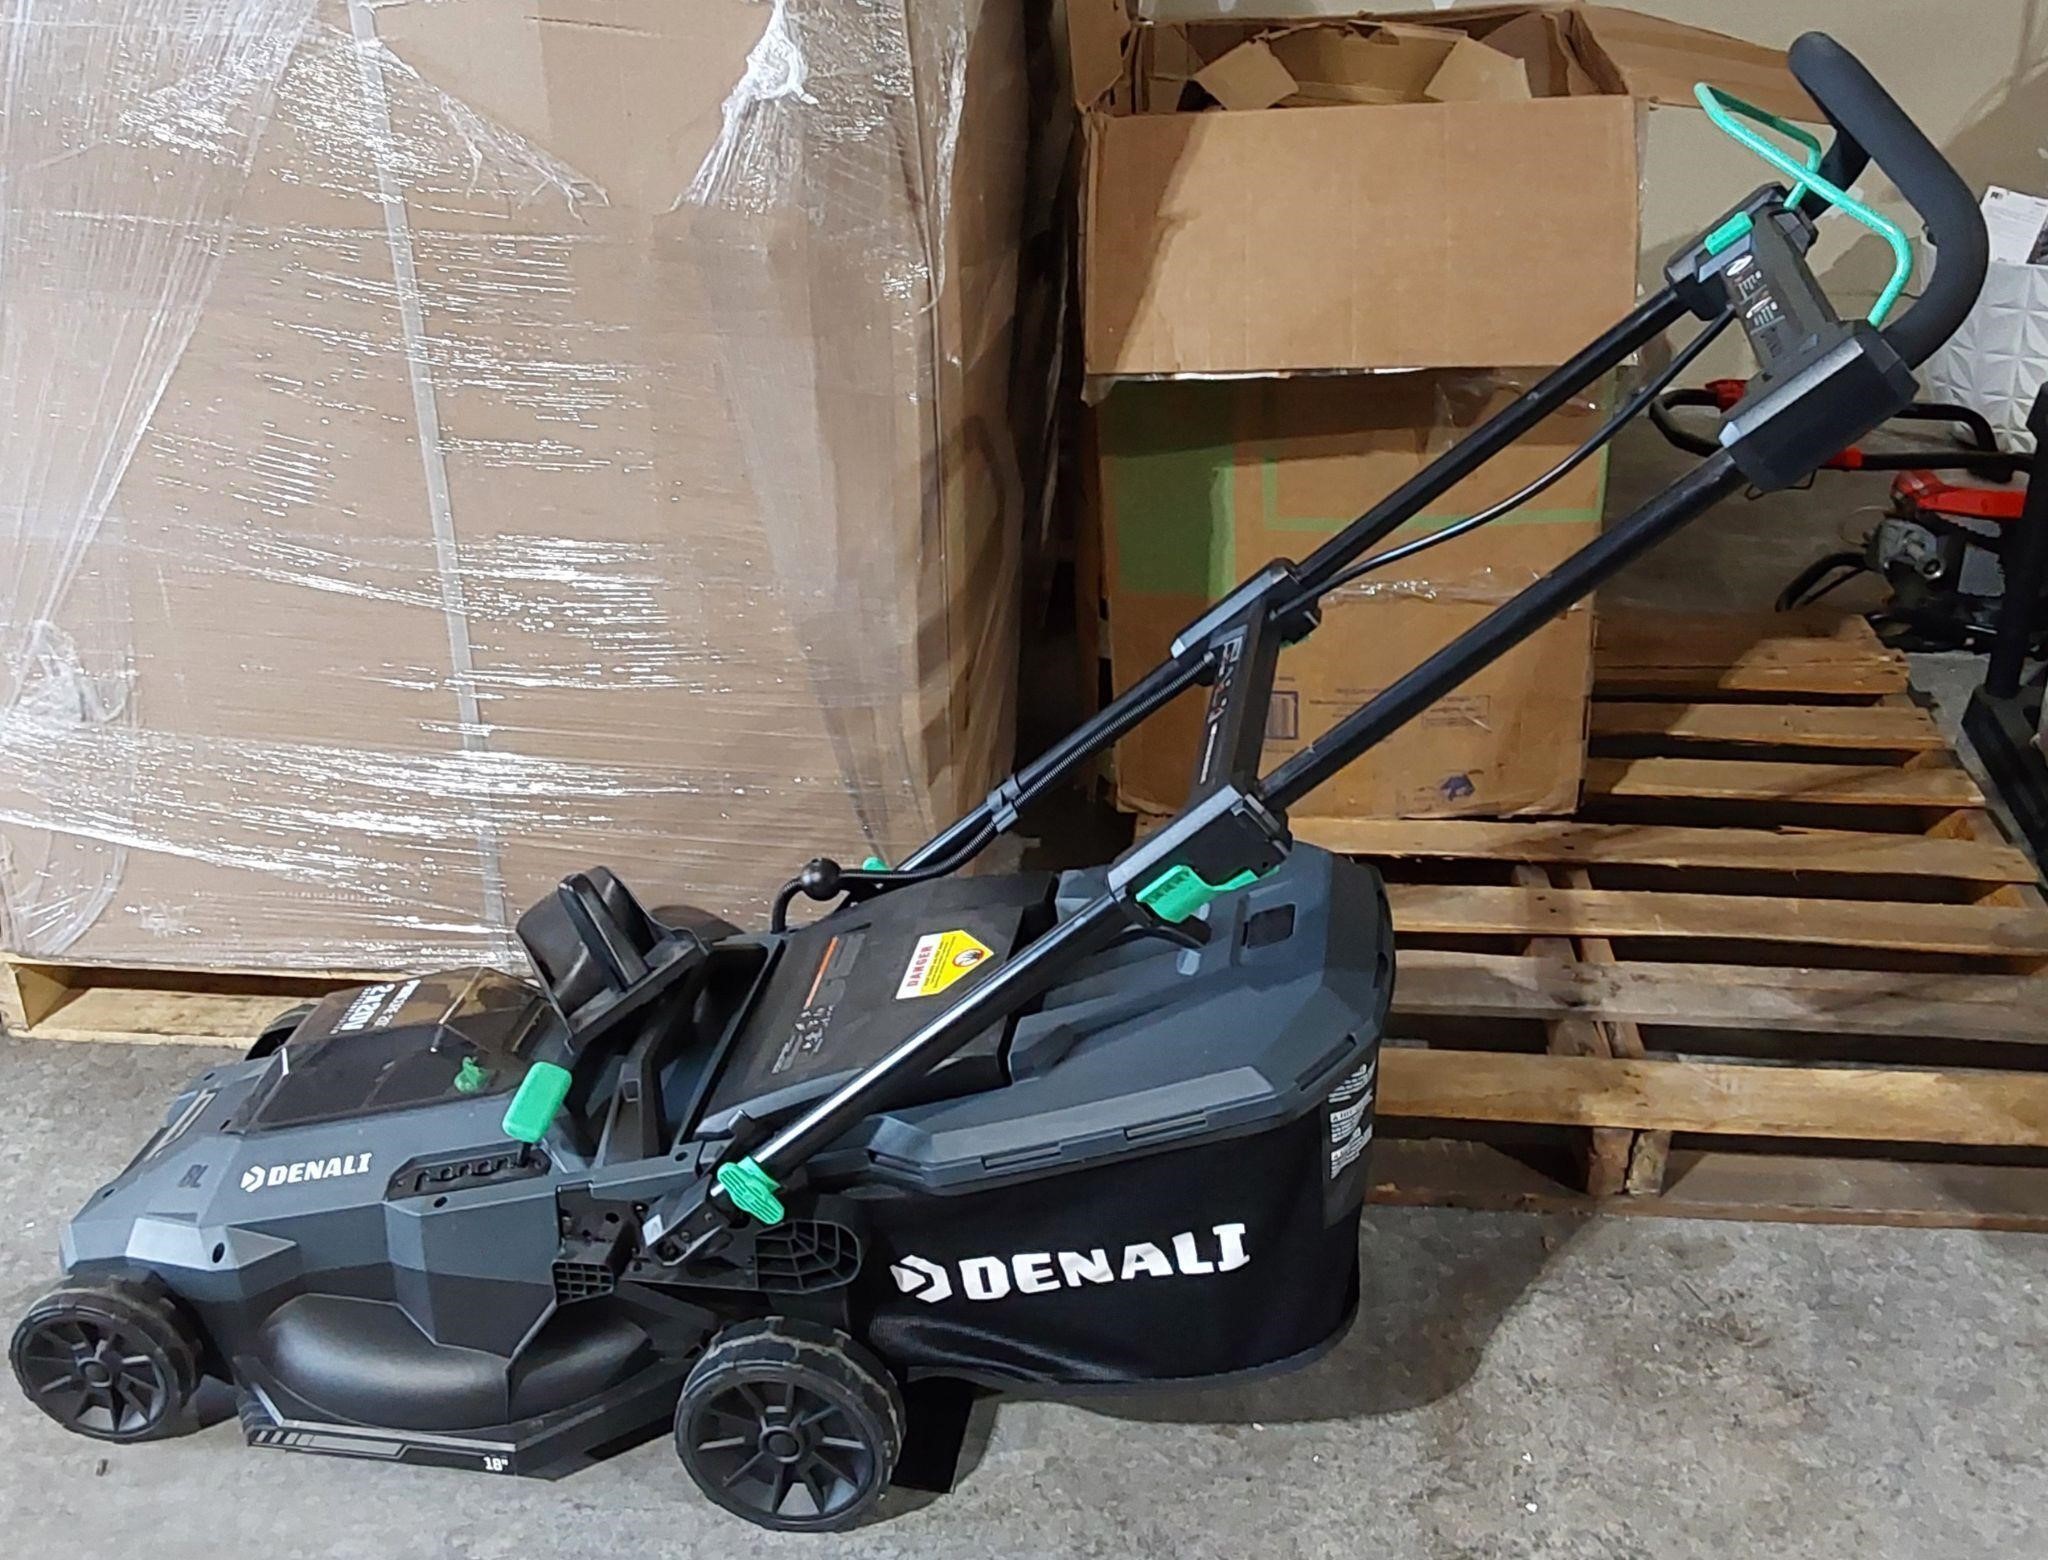 Denali by Skil 2x20v Lawn Mower NON WORKING